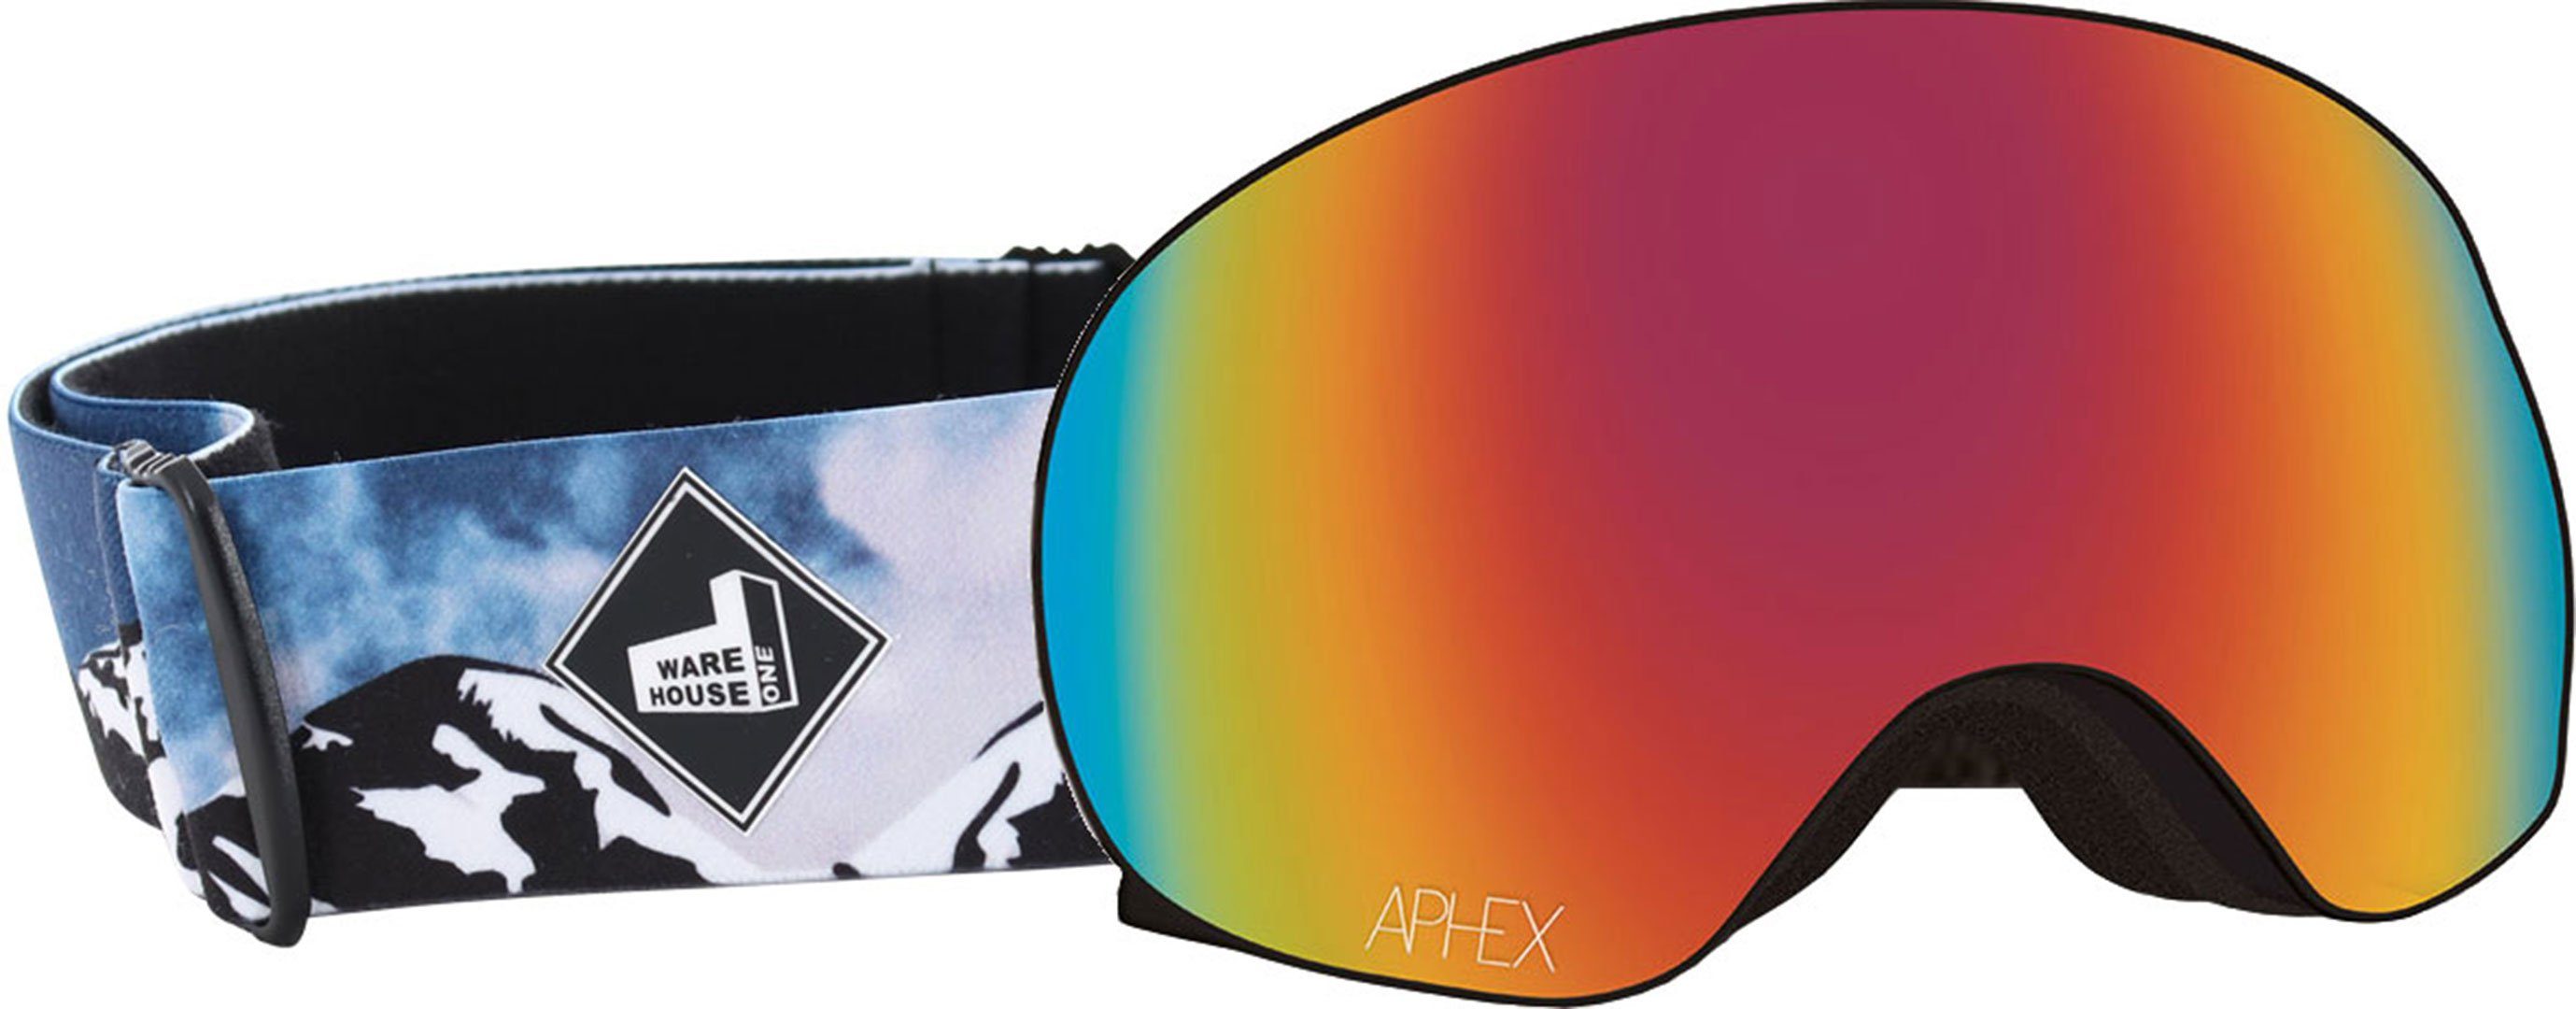 Aphex Snowboardbrille APHEX XPR THE ONE EDITION Magnet Schneebrille mountain strap + Glas | Brillen